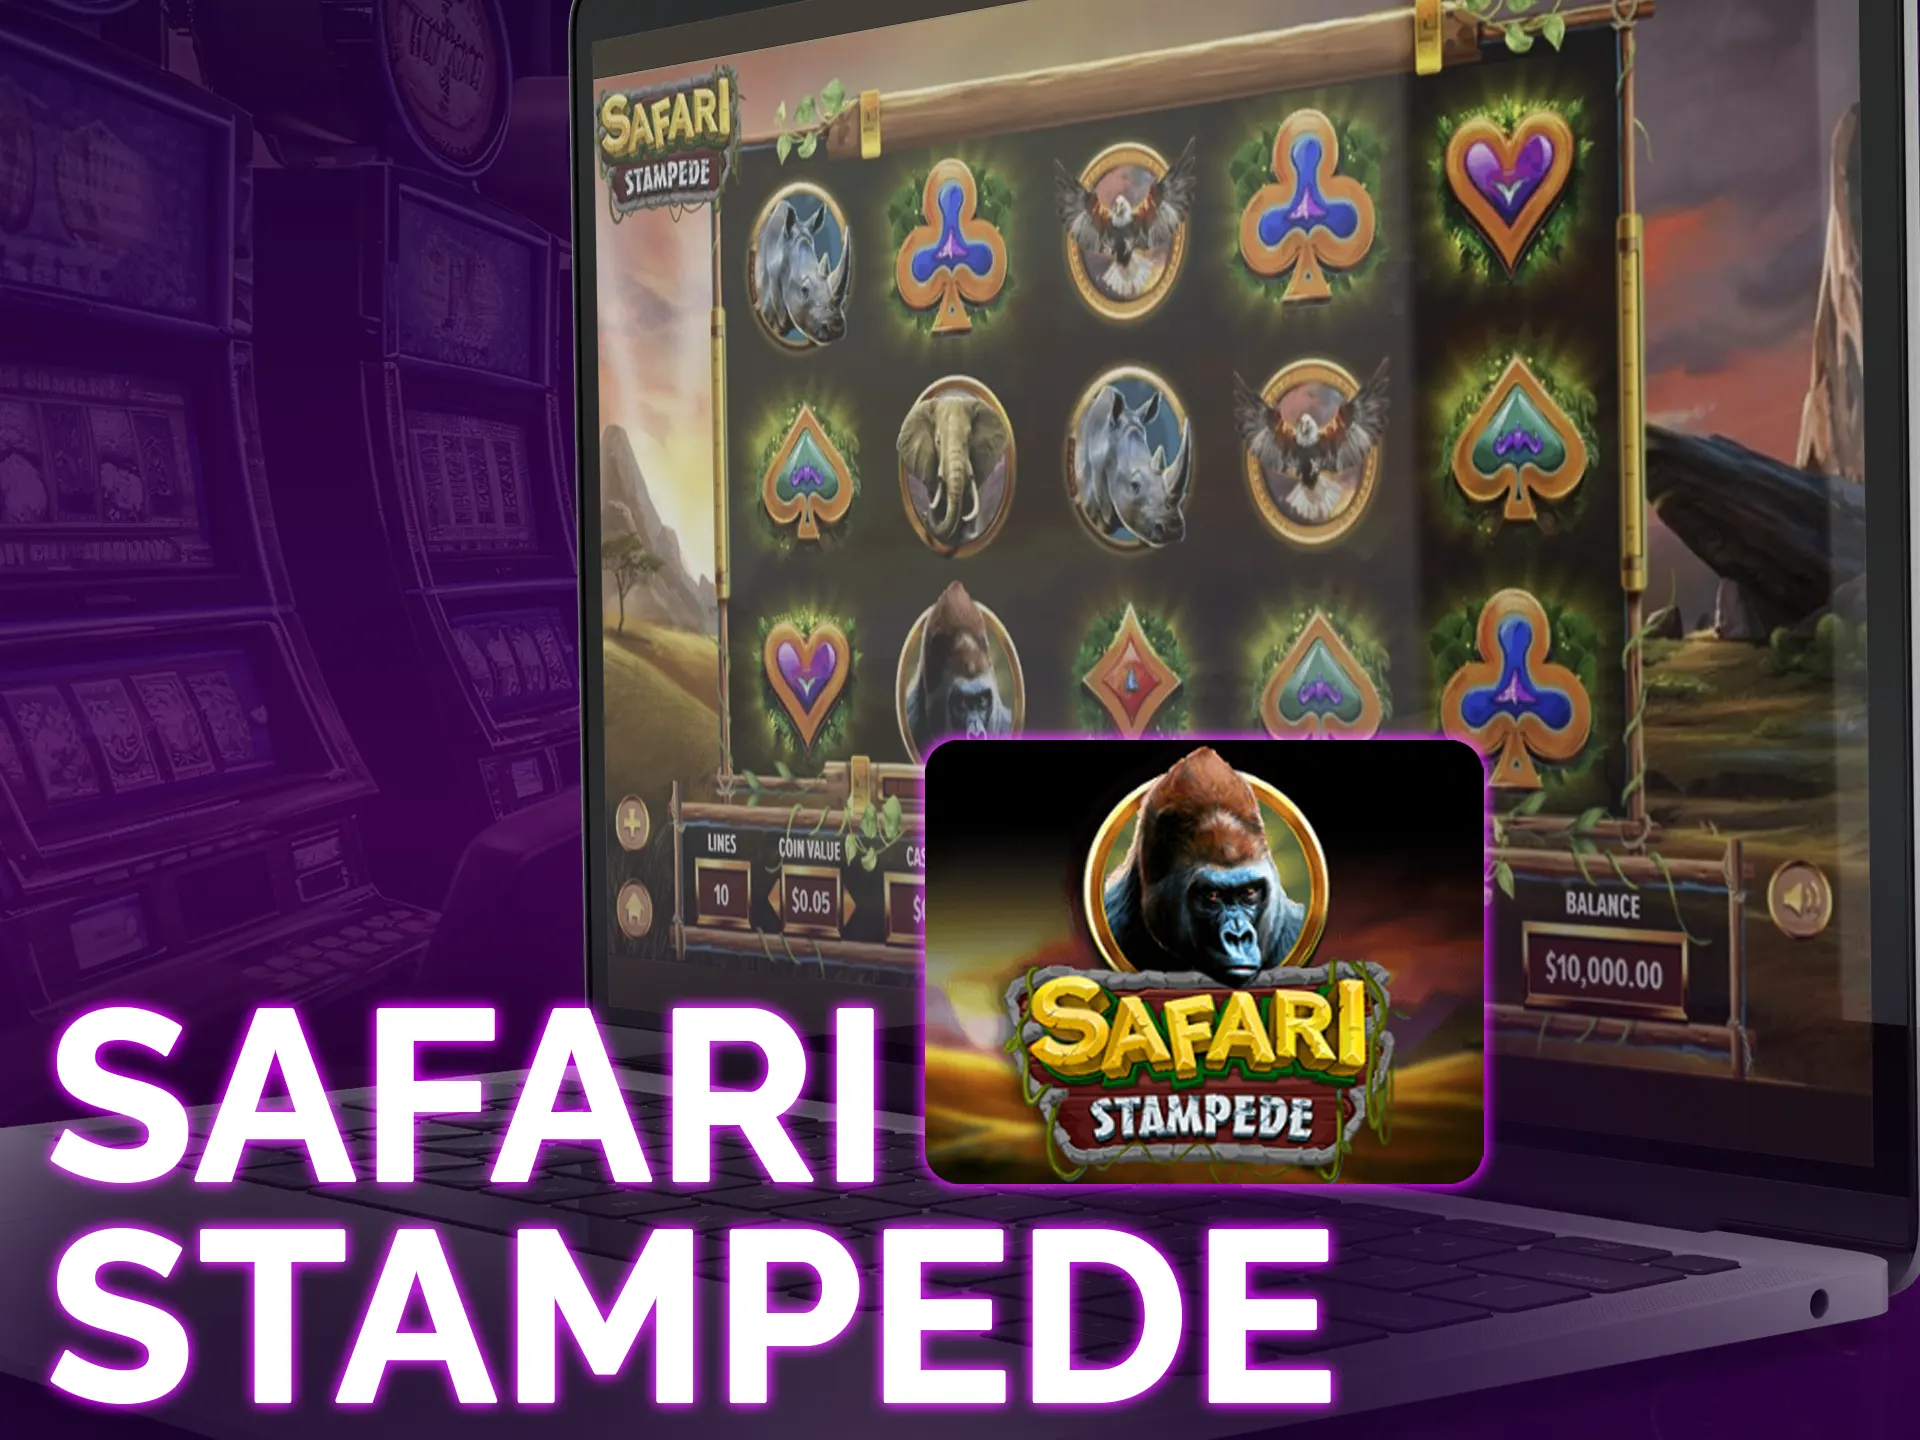 Embark on a thrilling safari with Dragon Gaming's Safari Stampede.